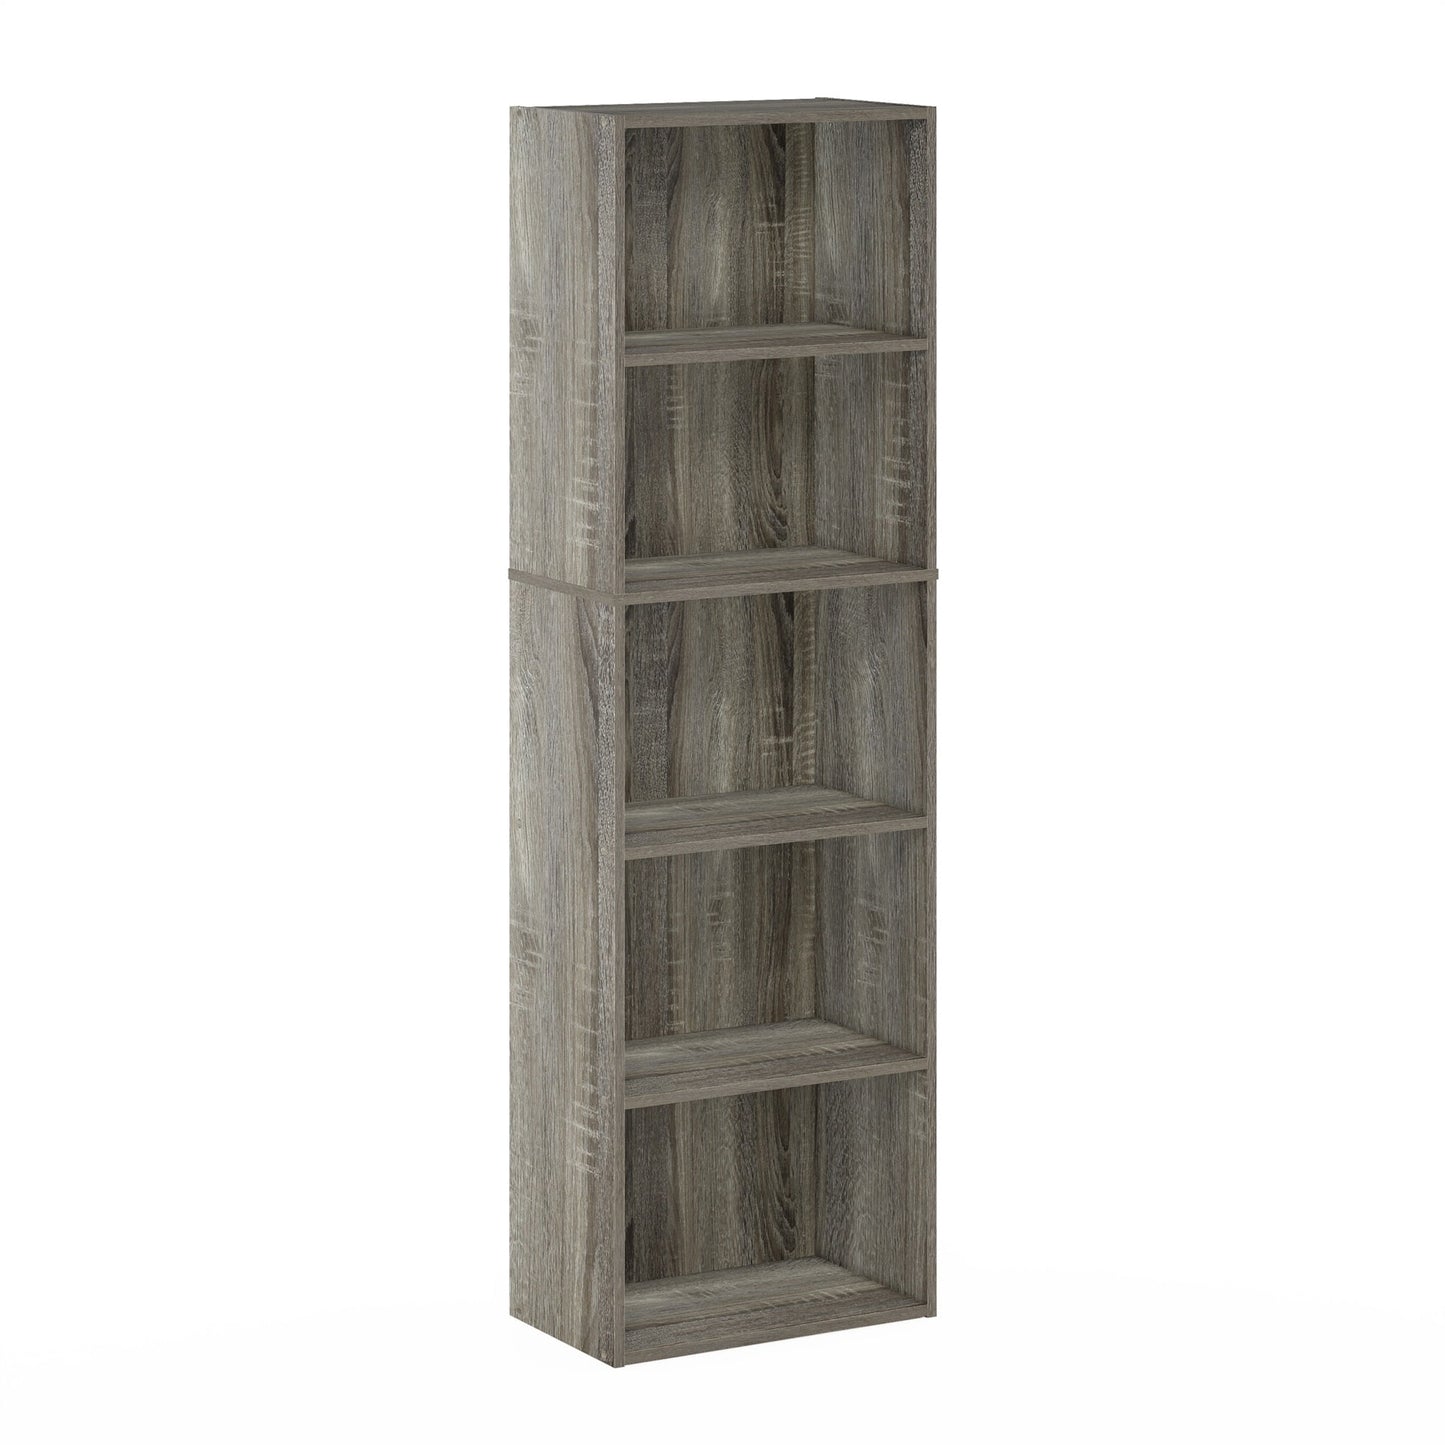 Furinno Luder 5-Tier Reversible Color Open Shelf Bookcase, French Oak